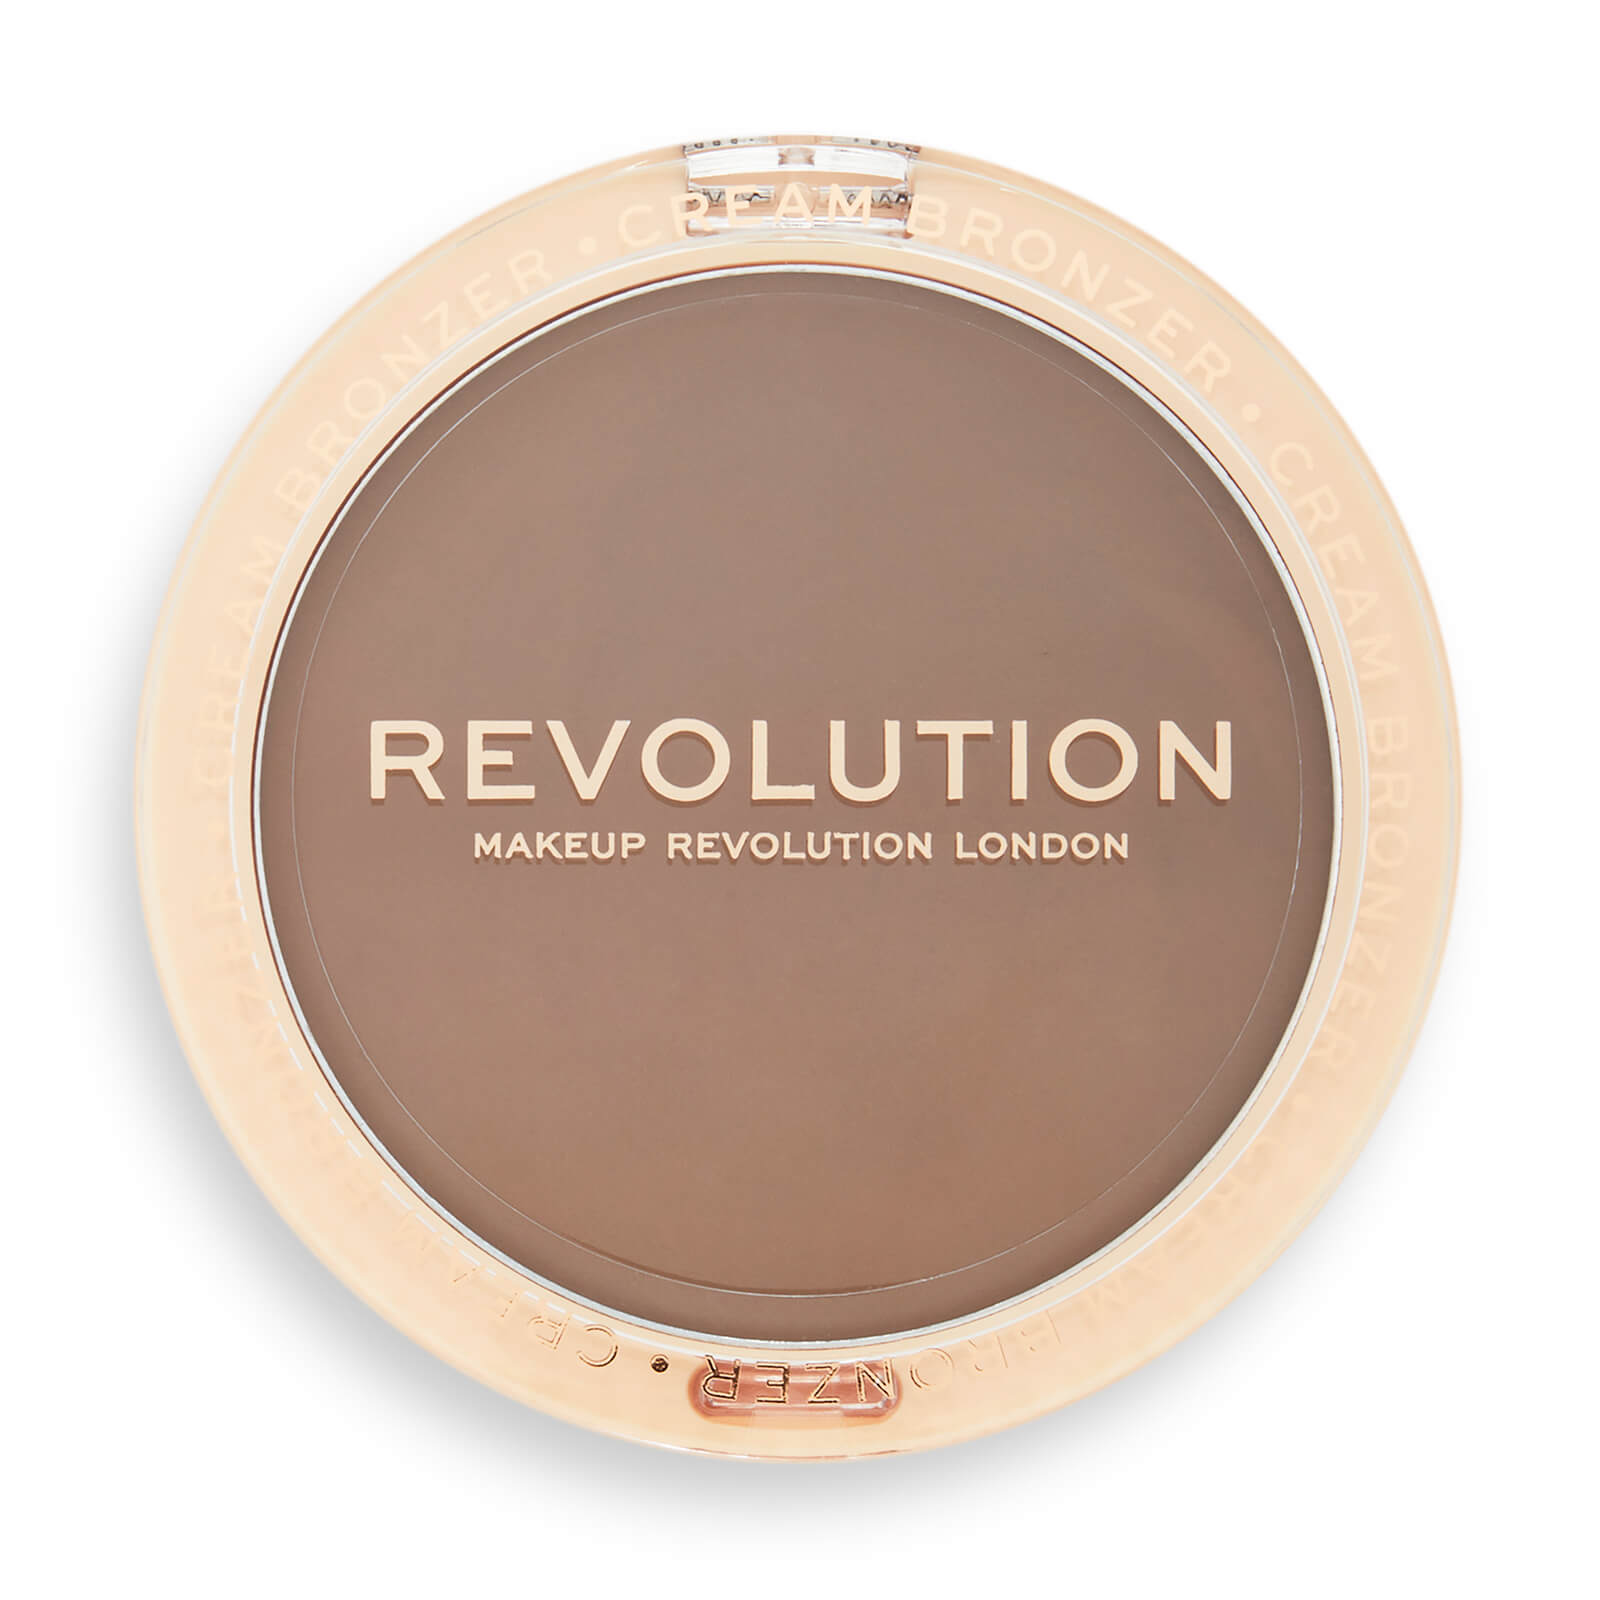 Makeup Revolution Ultra Cream Bronzer 12g (Various Shades) - Medium